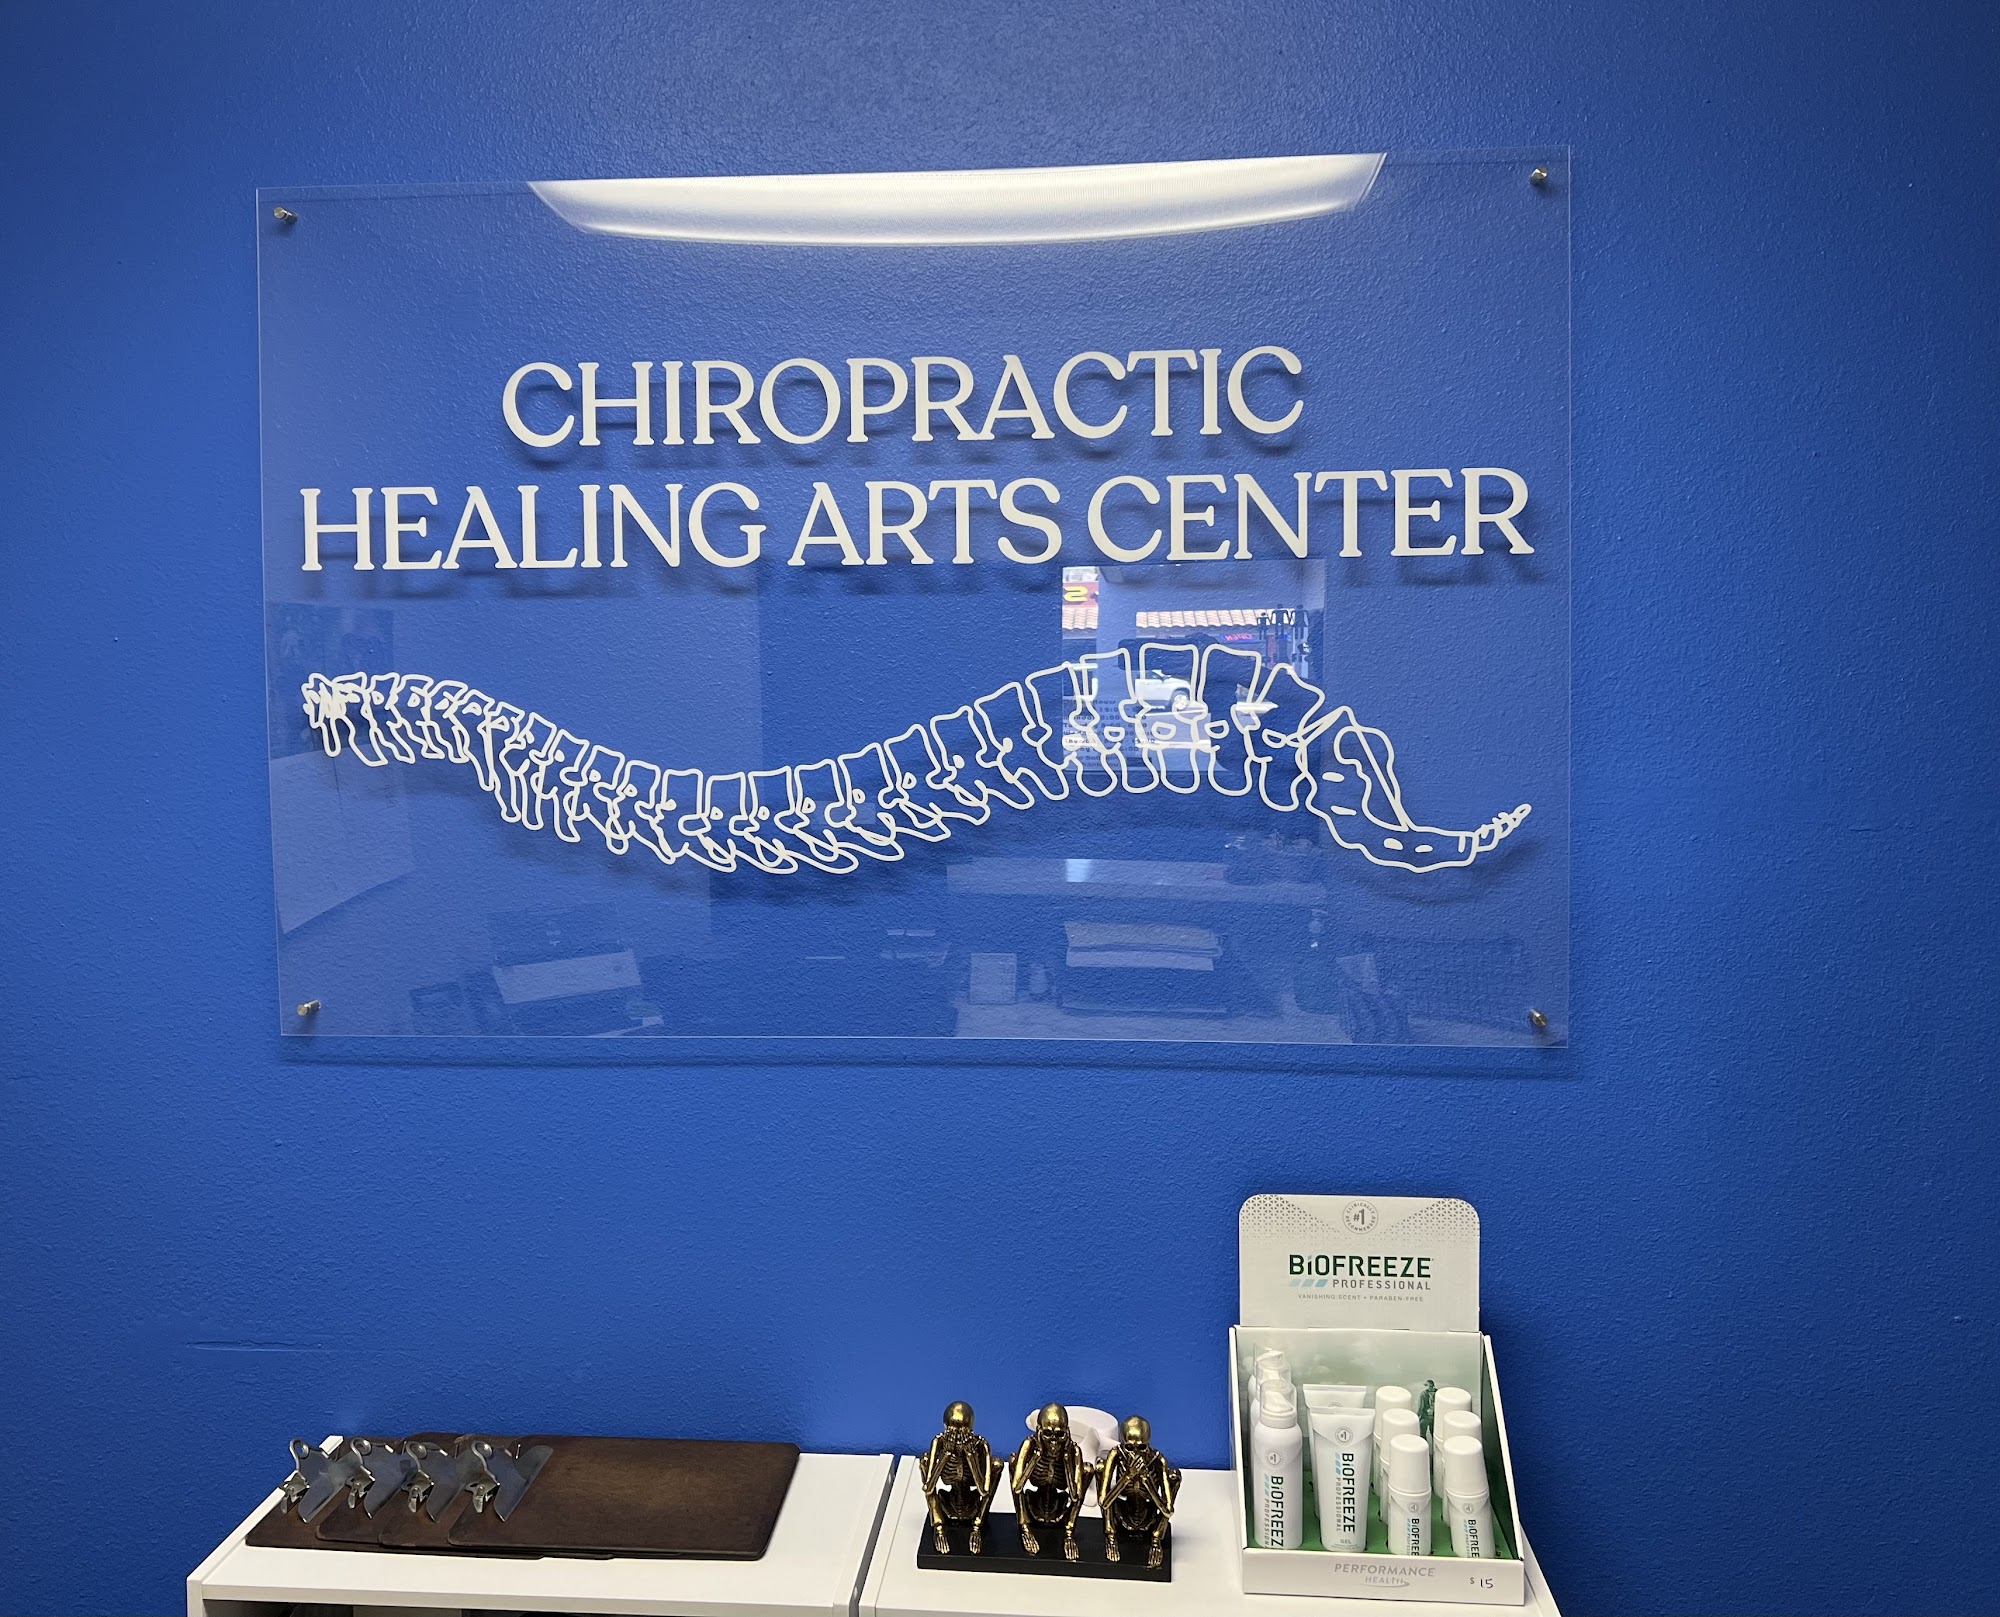 Chiropractic Healing Arts Center / Gianfranco Calafiore, DC